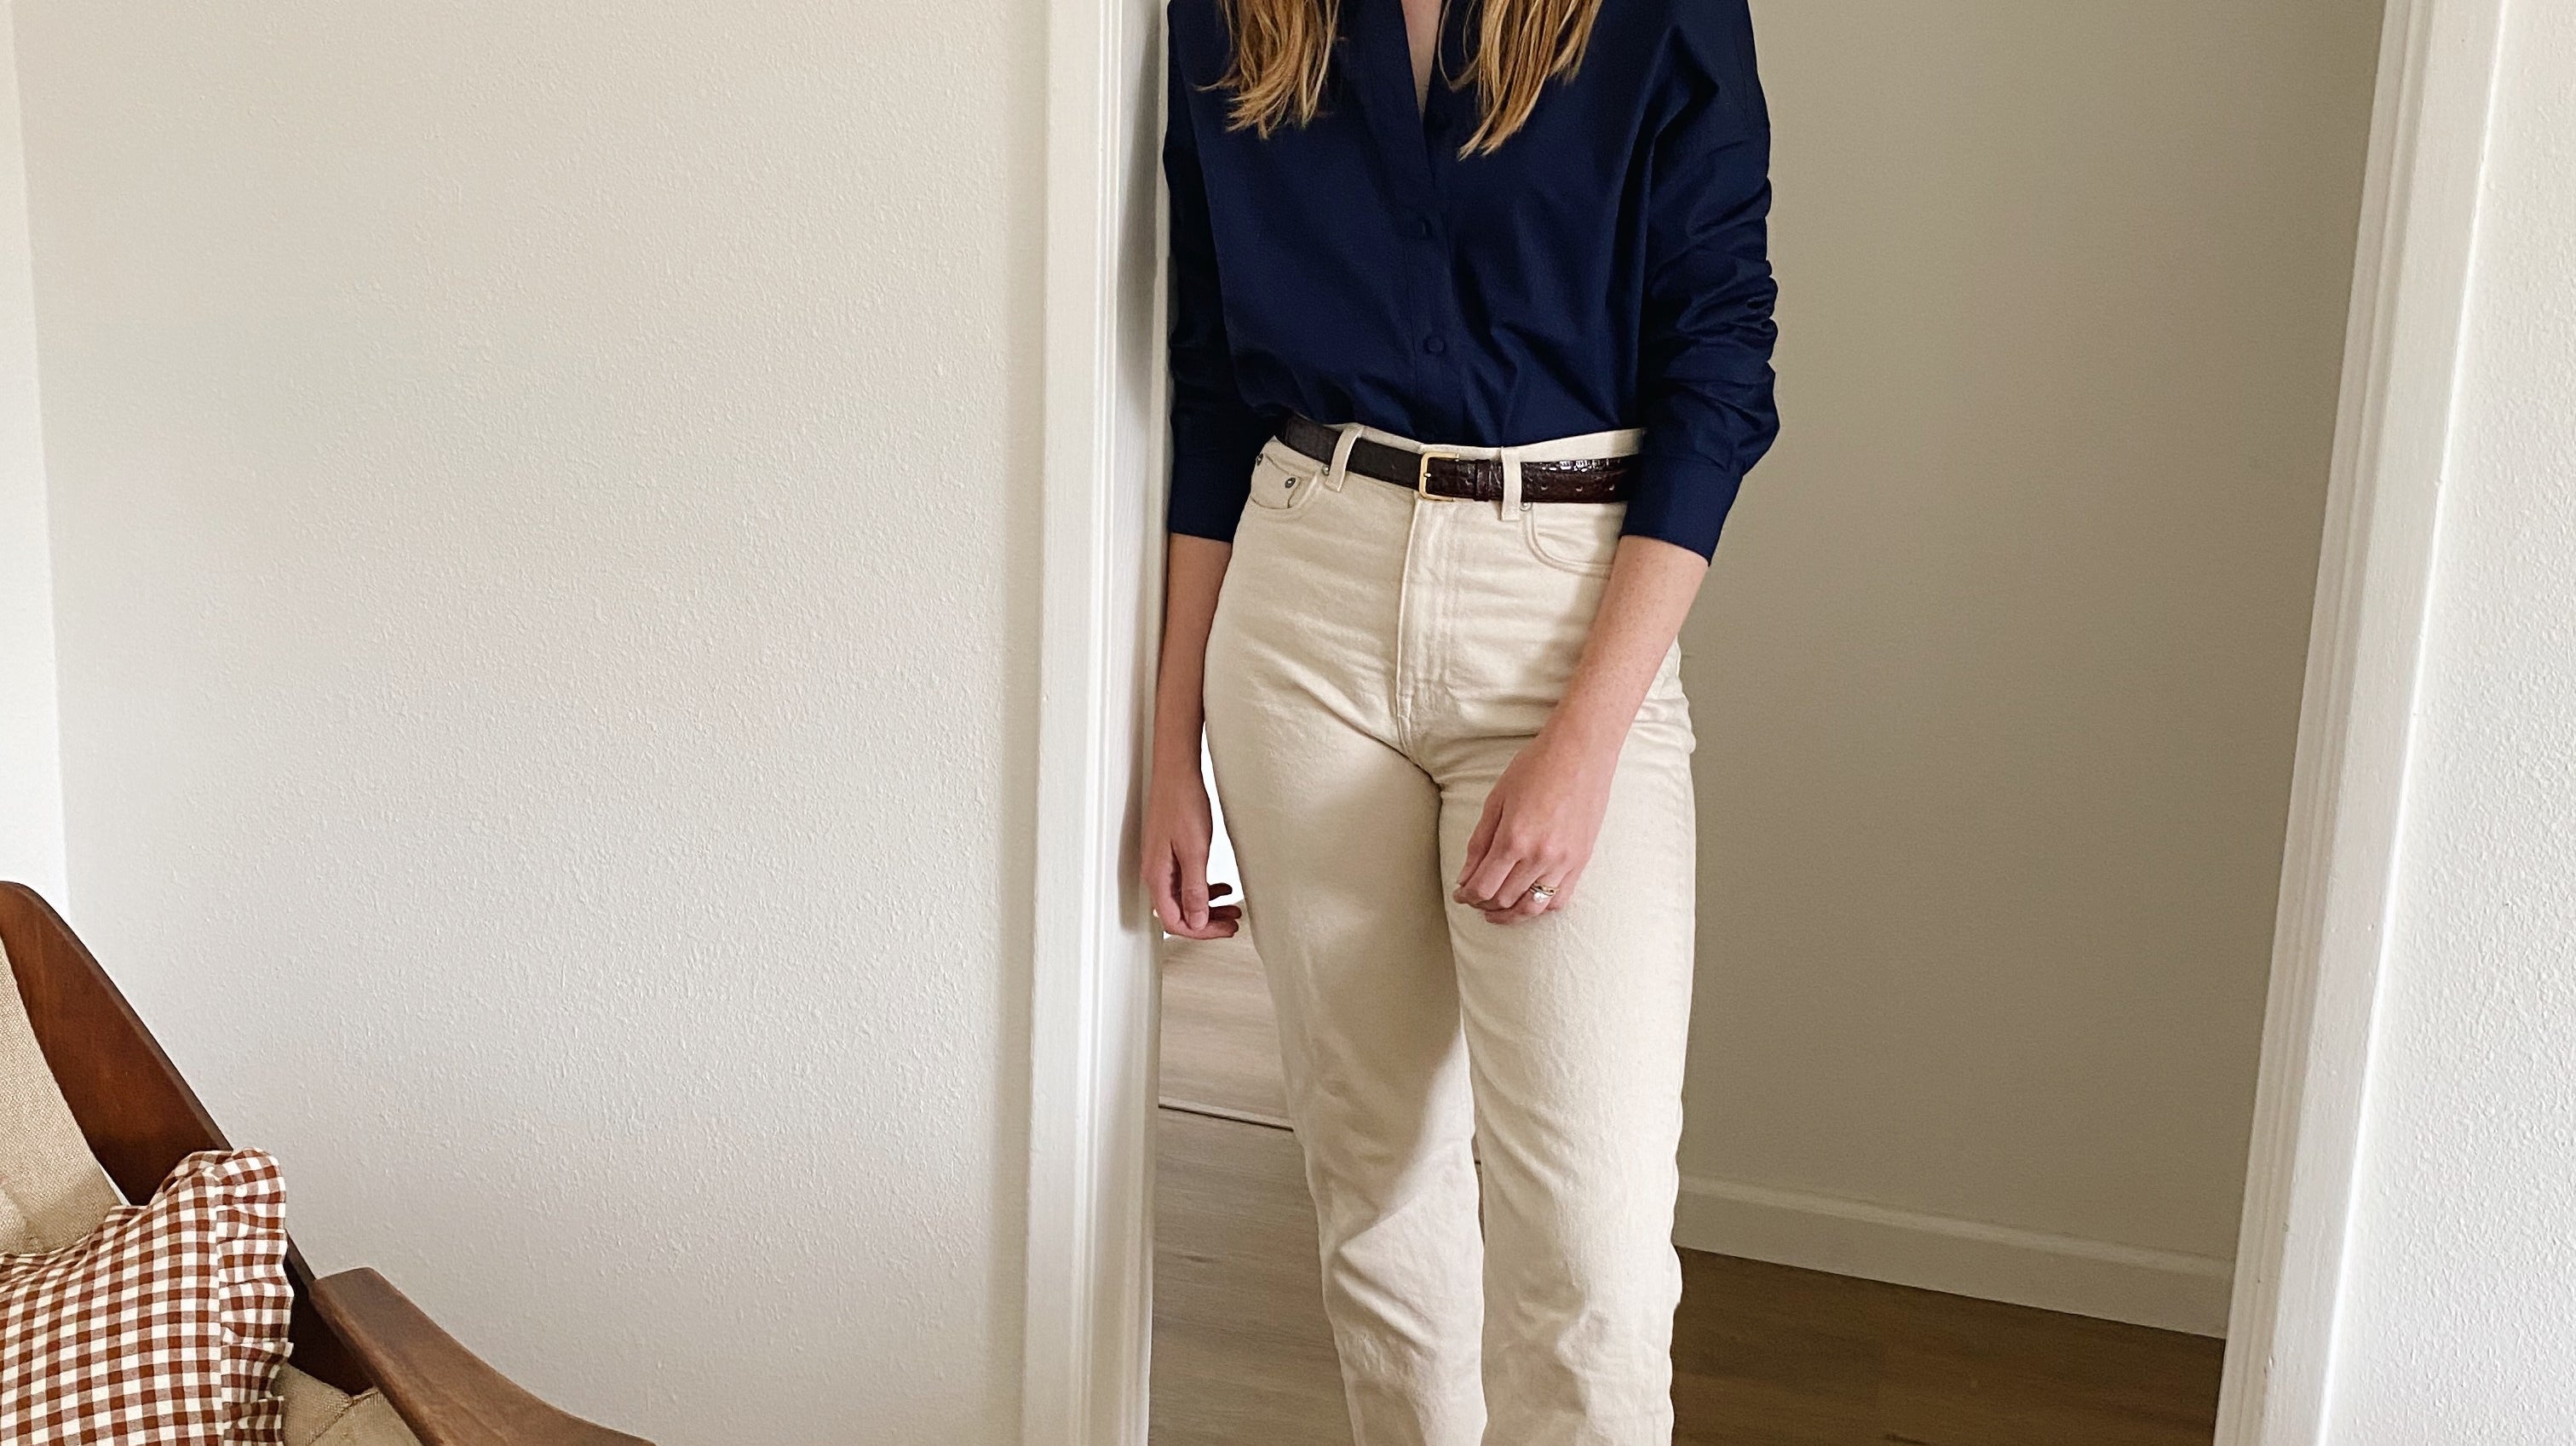 woman wearing white jeans